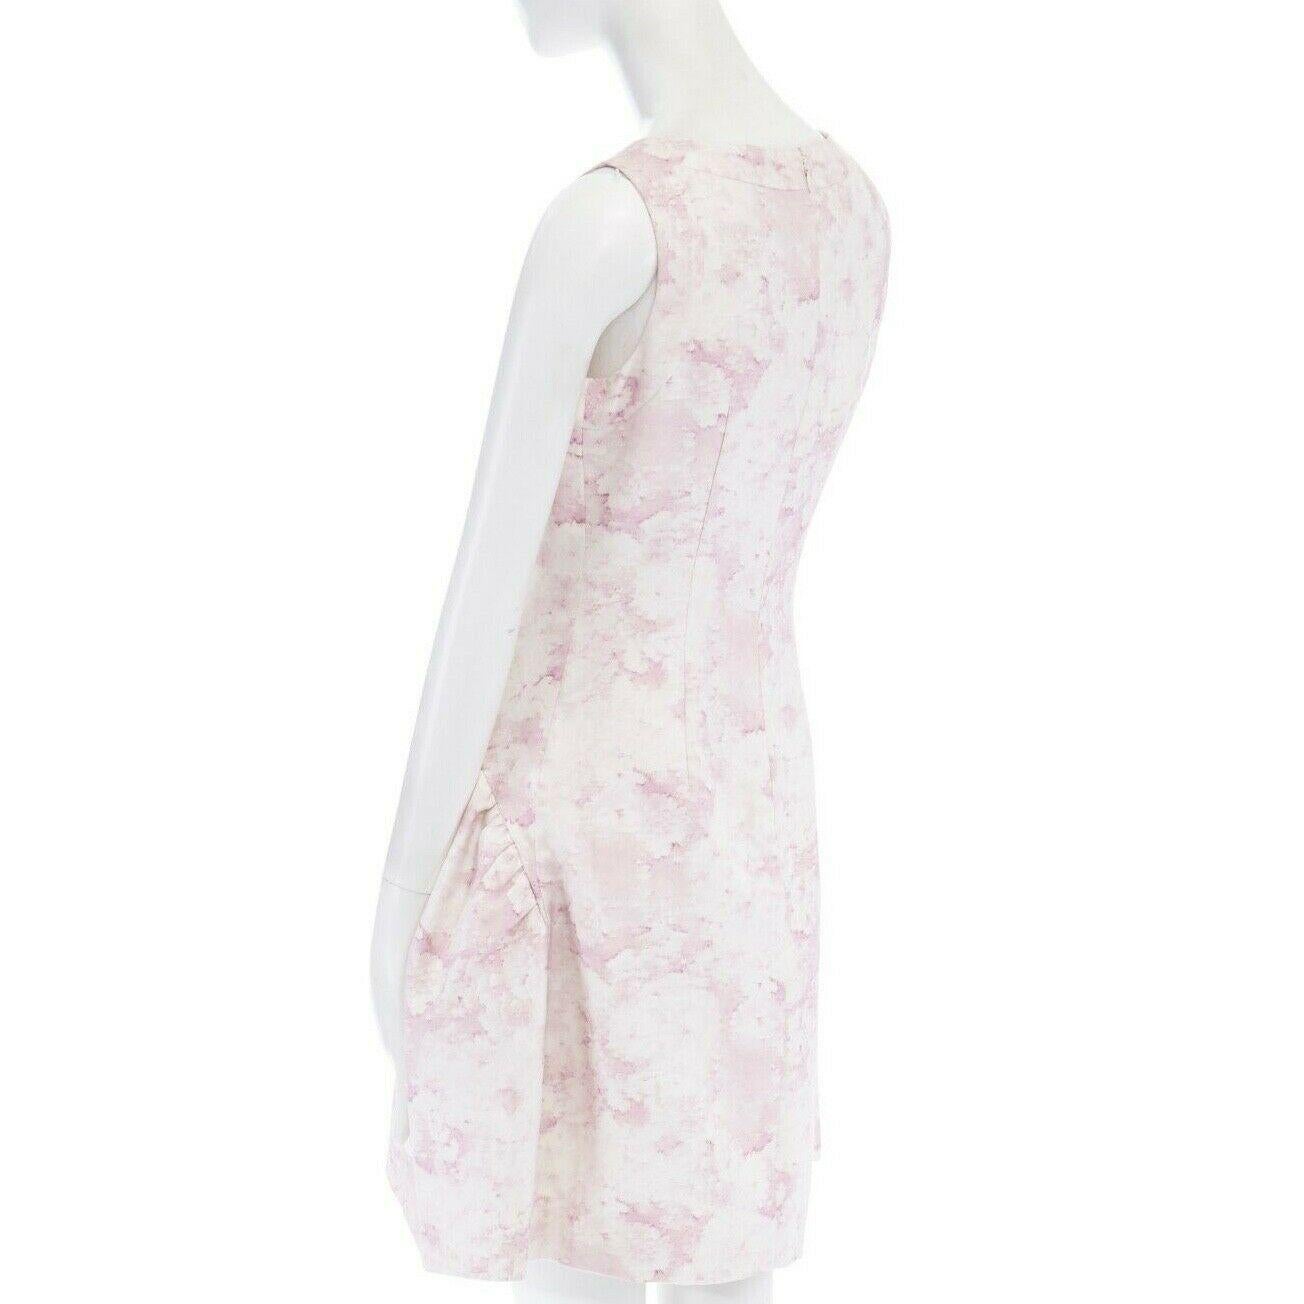 GIAMBATTISTA VALLI white blush pink floral print silk bubble front dress IT40 S 3